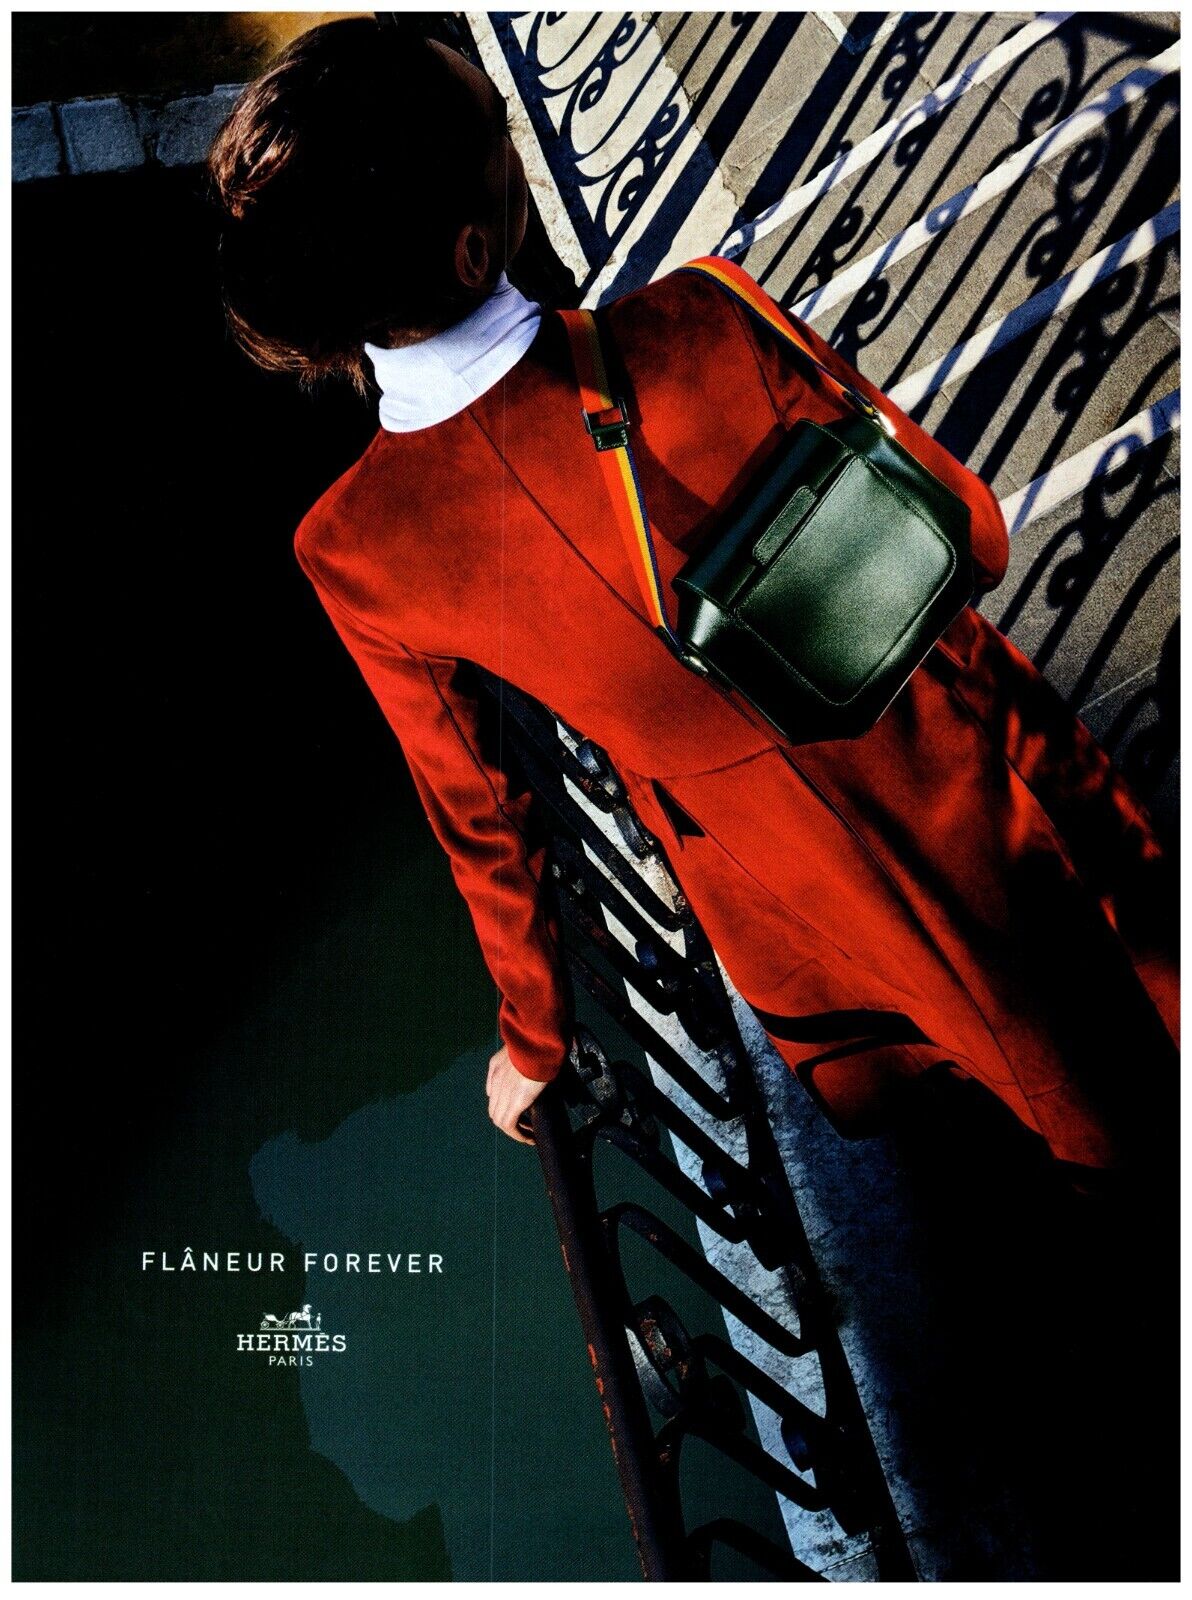 2015 Hermes Print Ad, Flaneur Forever Model Othilia Simon Red Coat Shoulder Bag